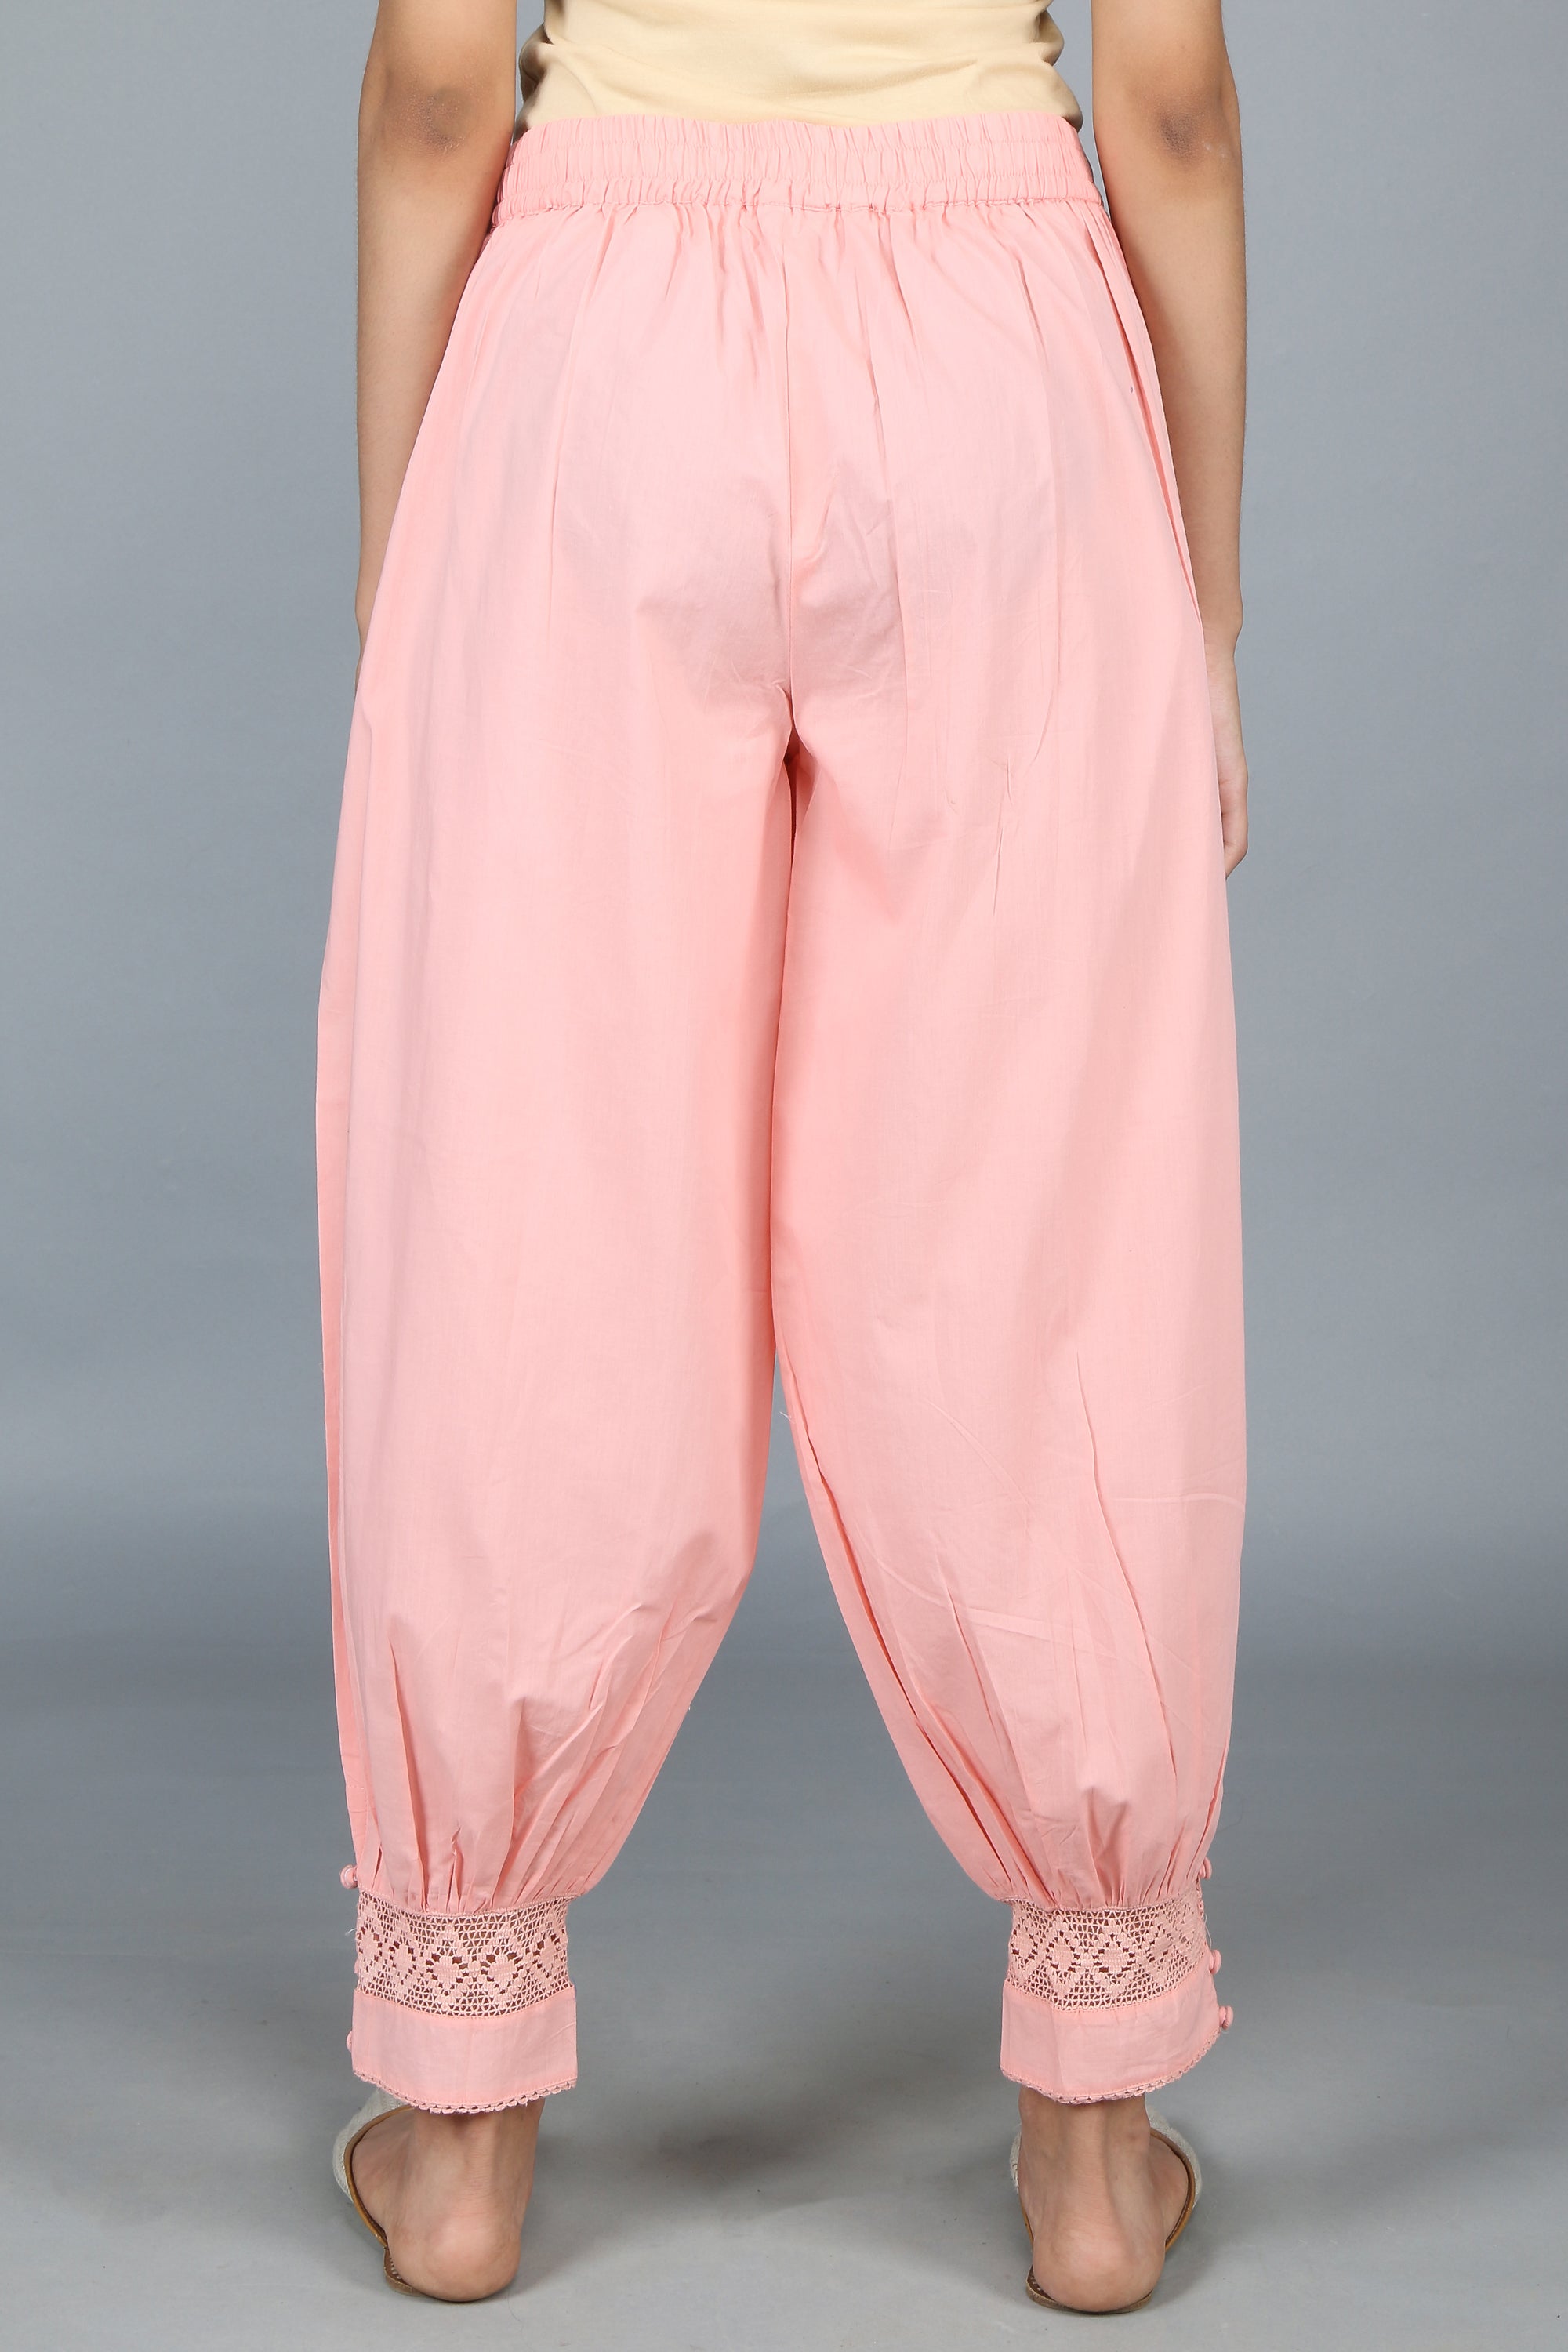 New Krishna Fashions Women's Loose Fit Harem Pants  (PNT_752_Multicolored_Free Size) : Amazon.in: Fashion